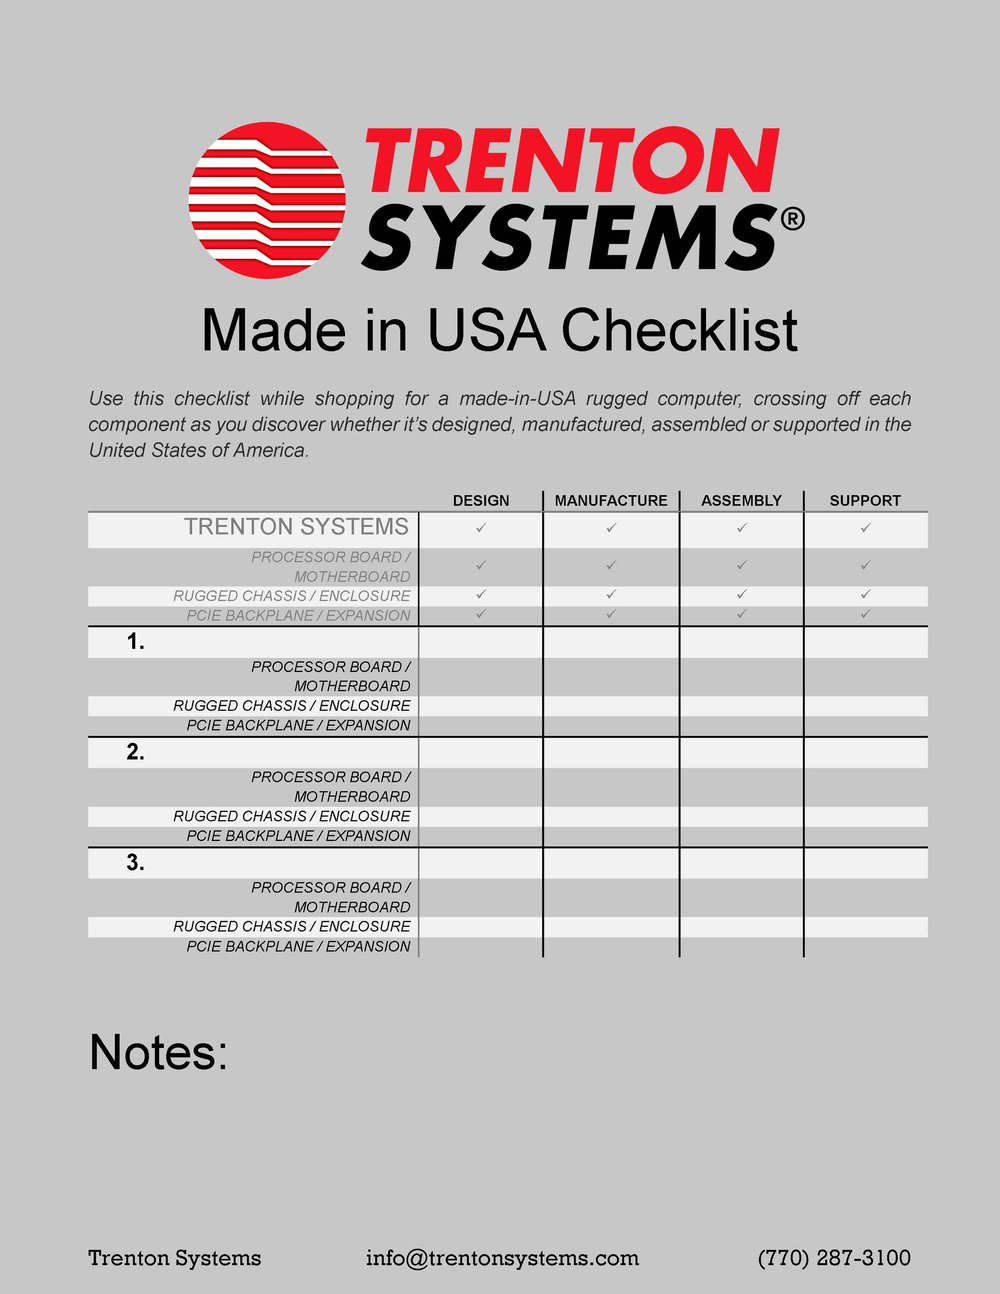 Trenton Systems' made in USA checklist